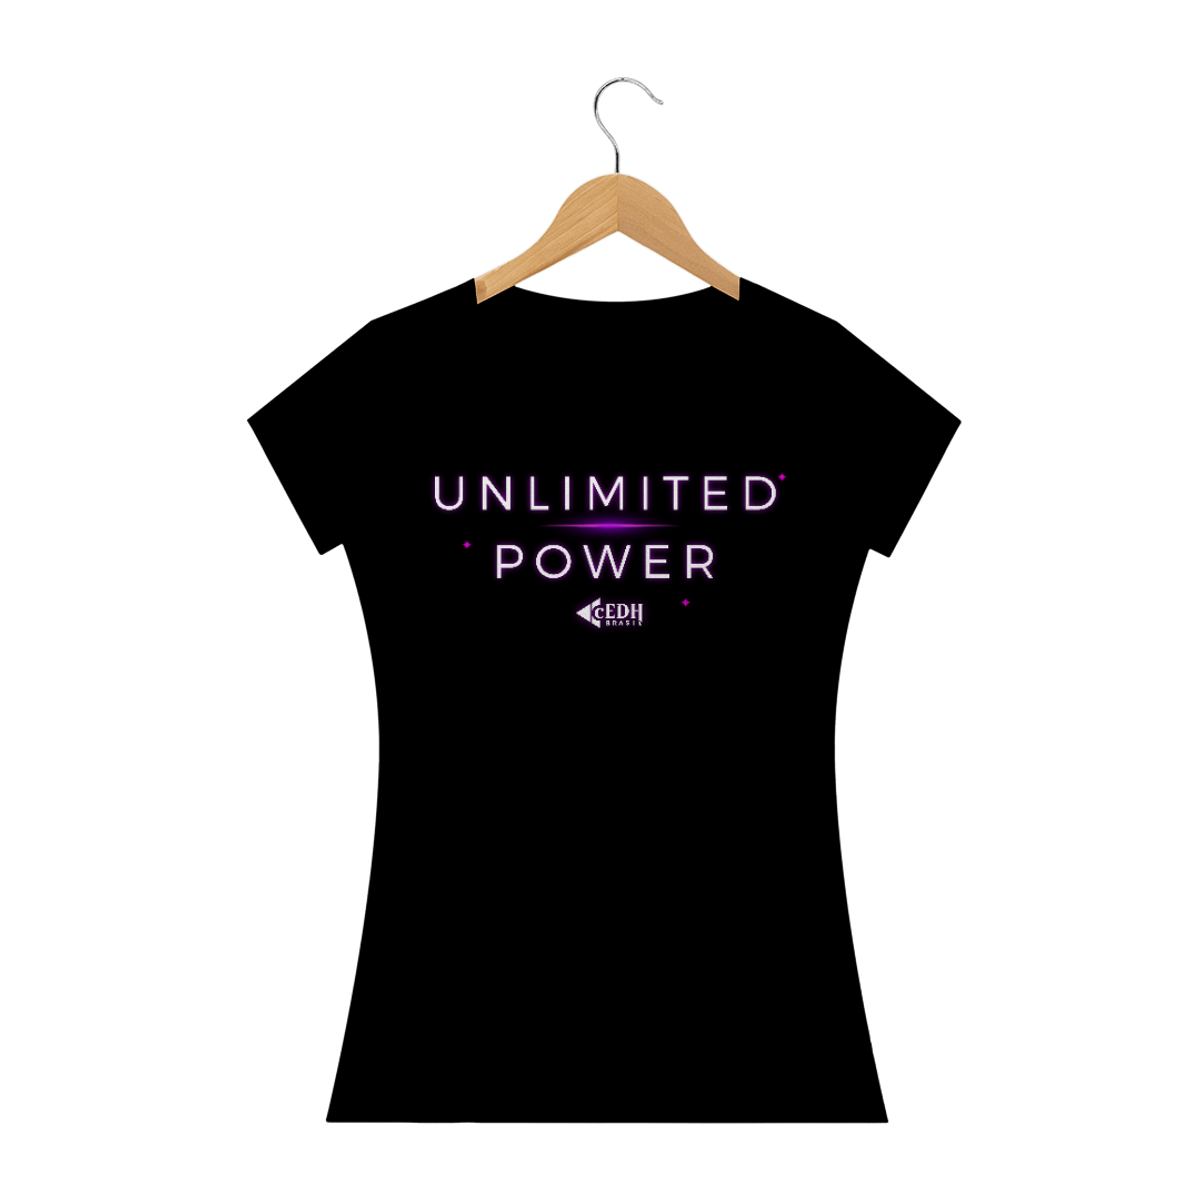 Nome do produto: Unlimited Power - cEDH [Baby]